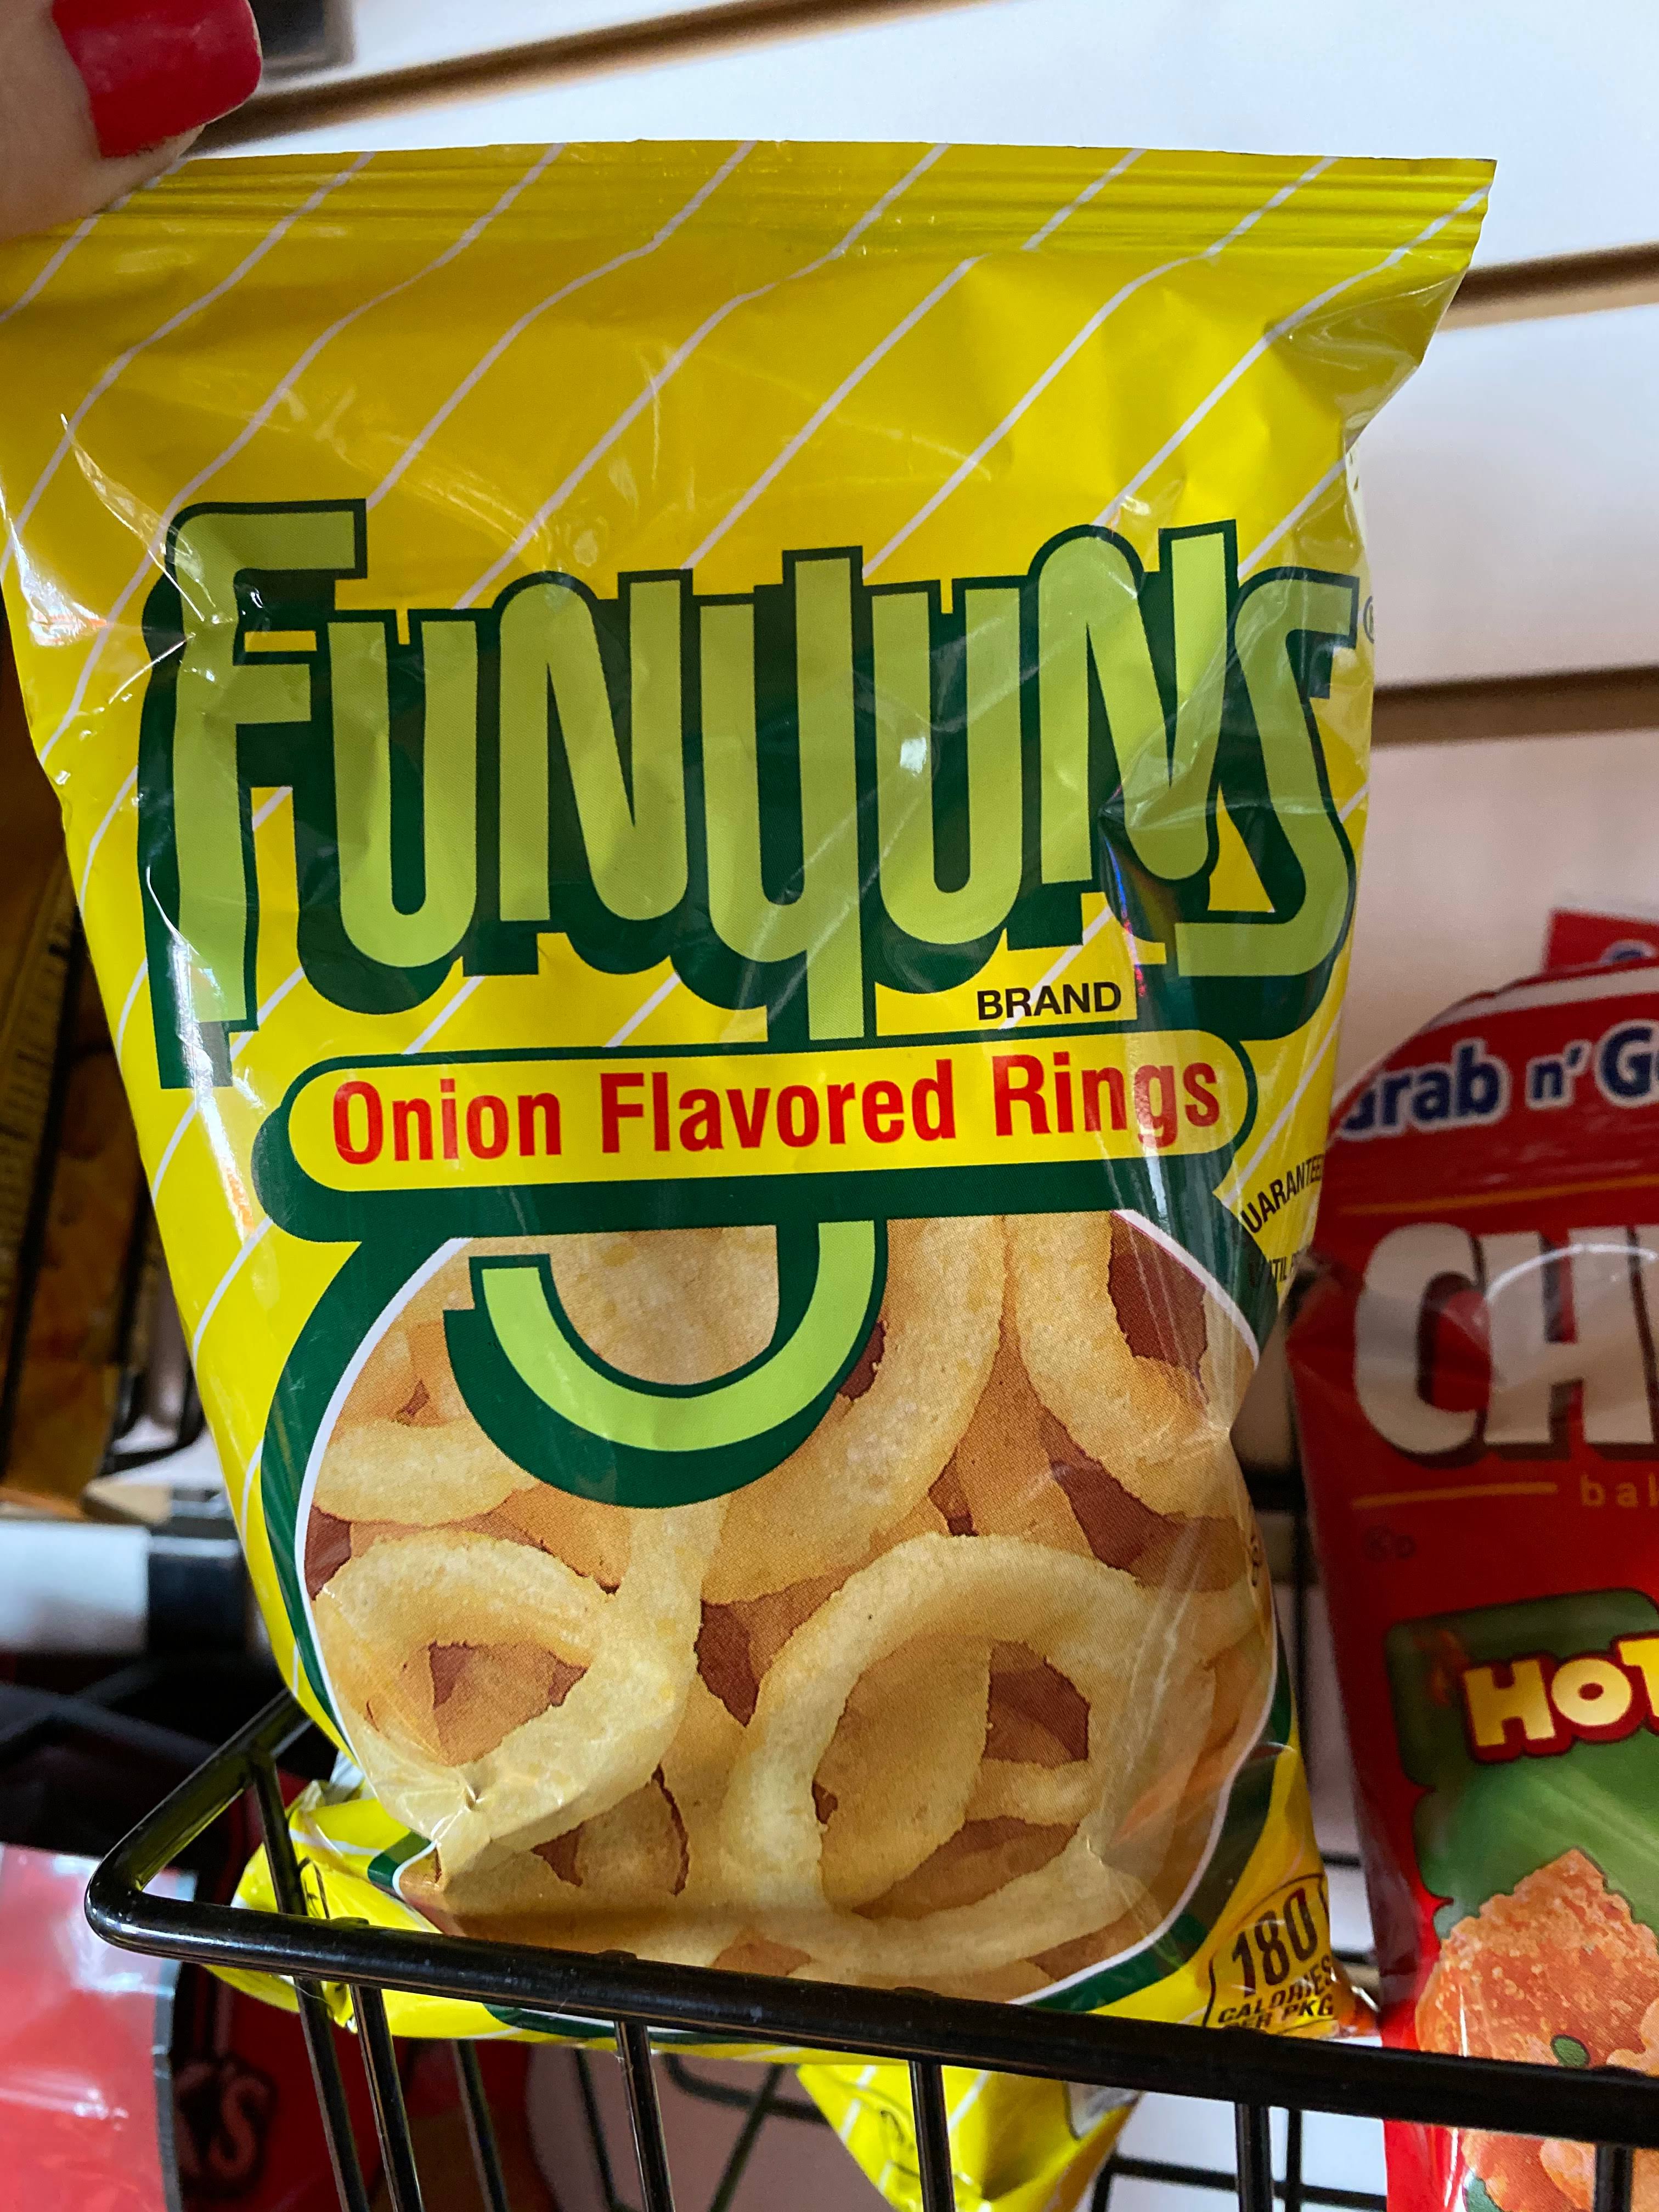 American Funyuns (53.1g 7 Pack) Famous Onion Flavored Rings Crisps Snacks Classic Popular Fun Bag Bulk Deal Fancy Appetizers Grab Varieties Hot &